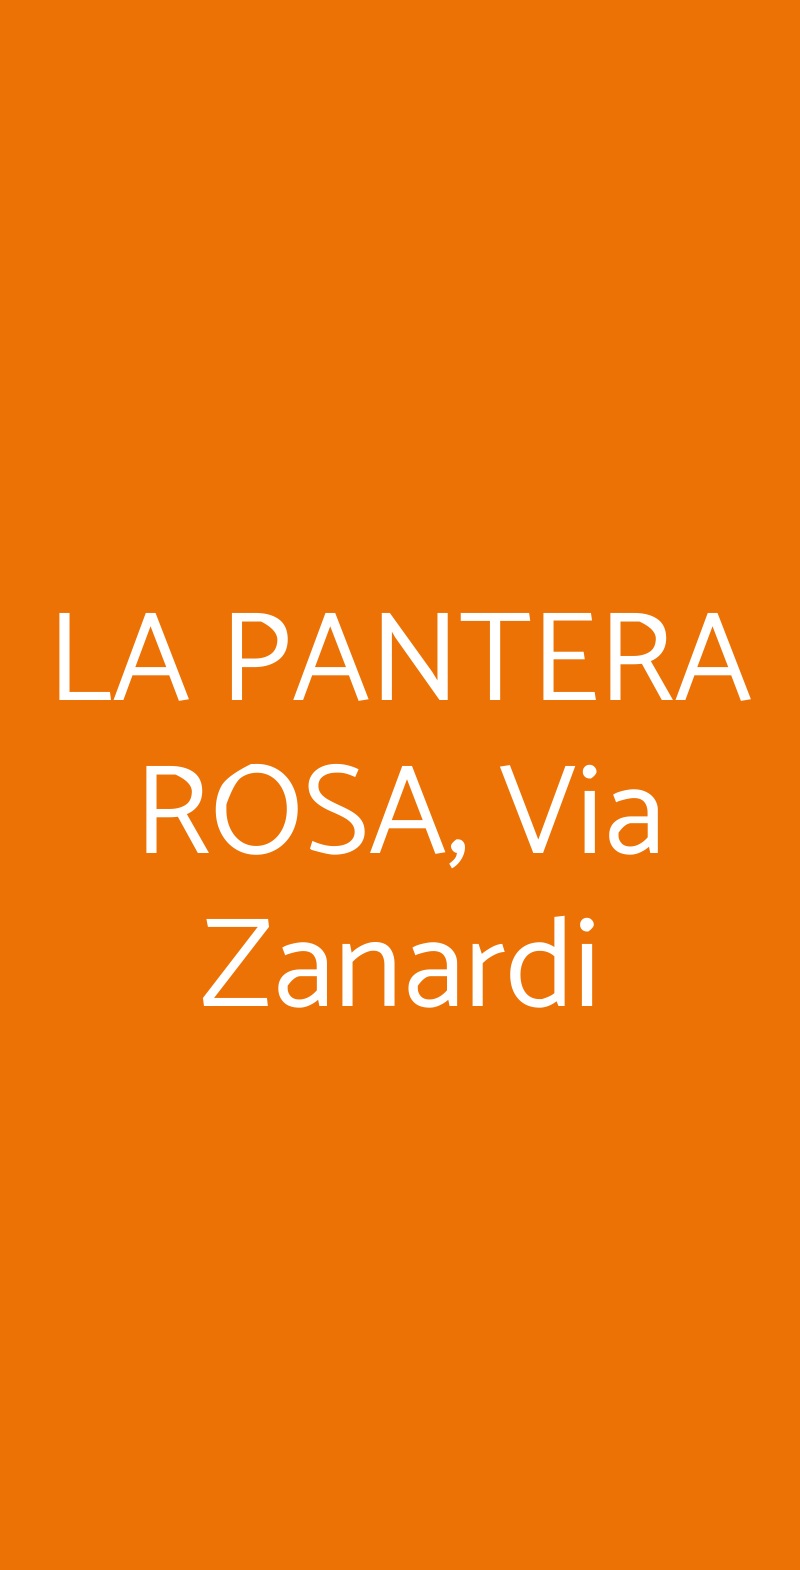 LA PANTERA ROSA, Via Zanardi Bologna menù 1 pagina